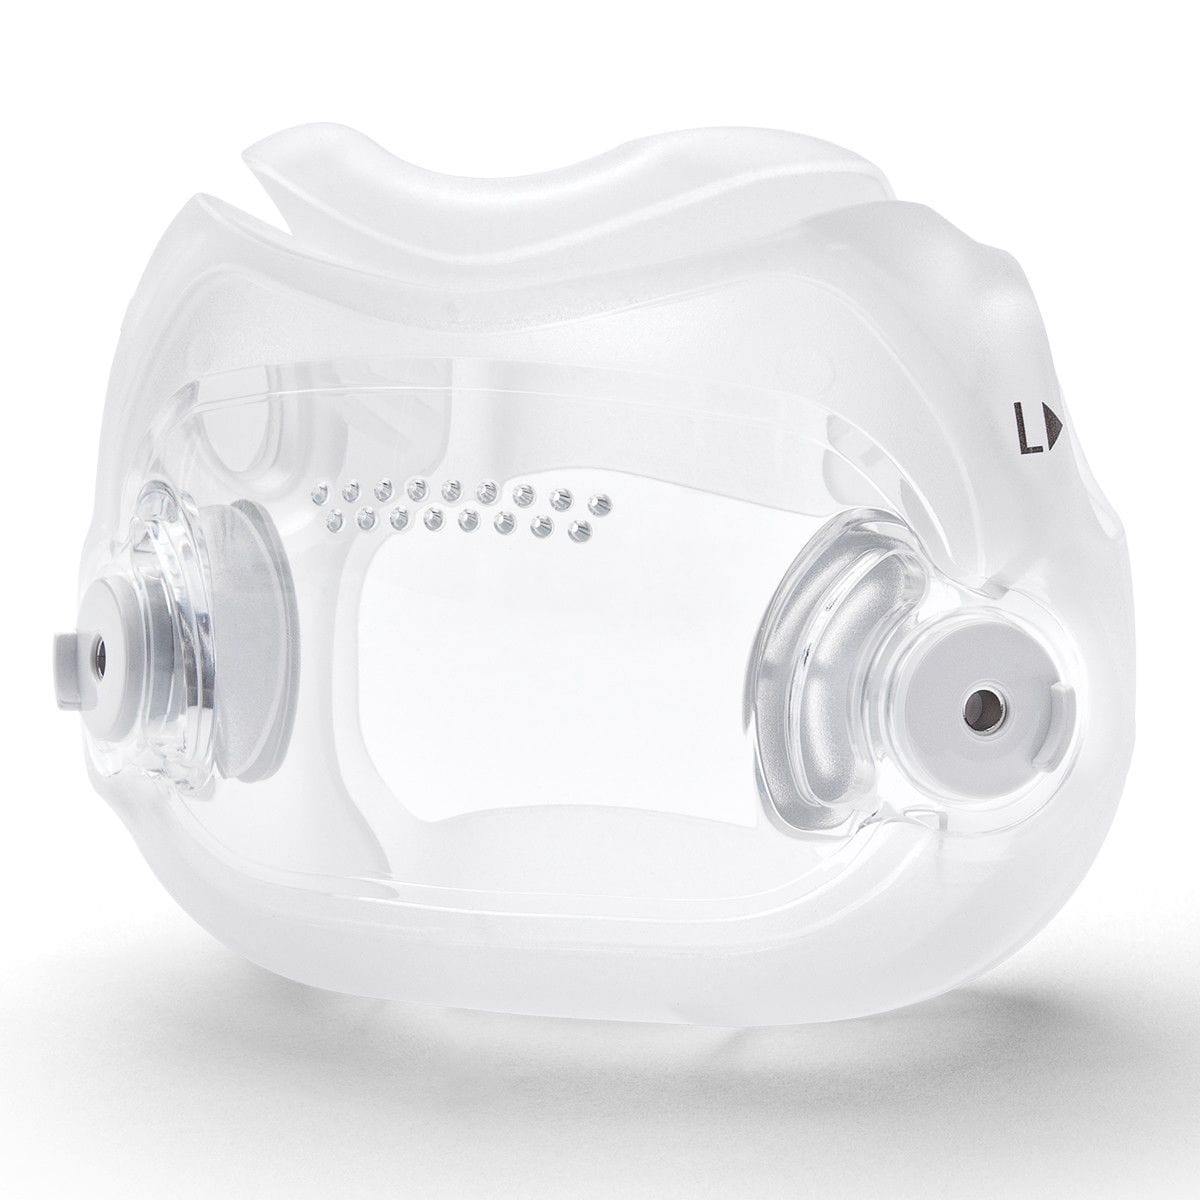 Philips Respironics - Dreamwear full face CPAP